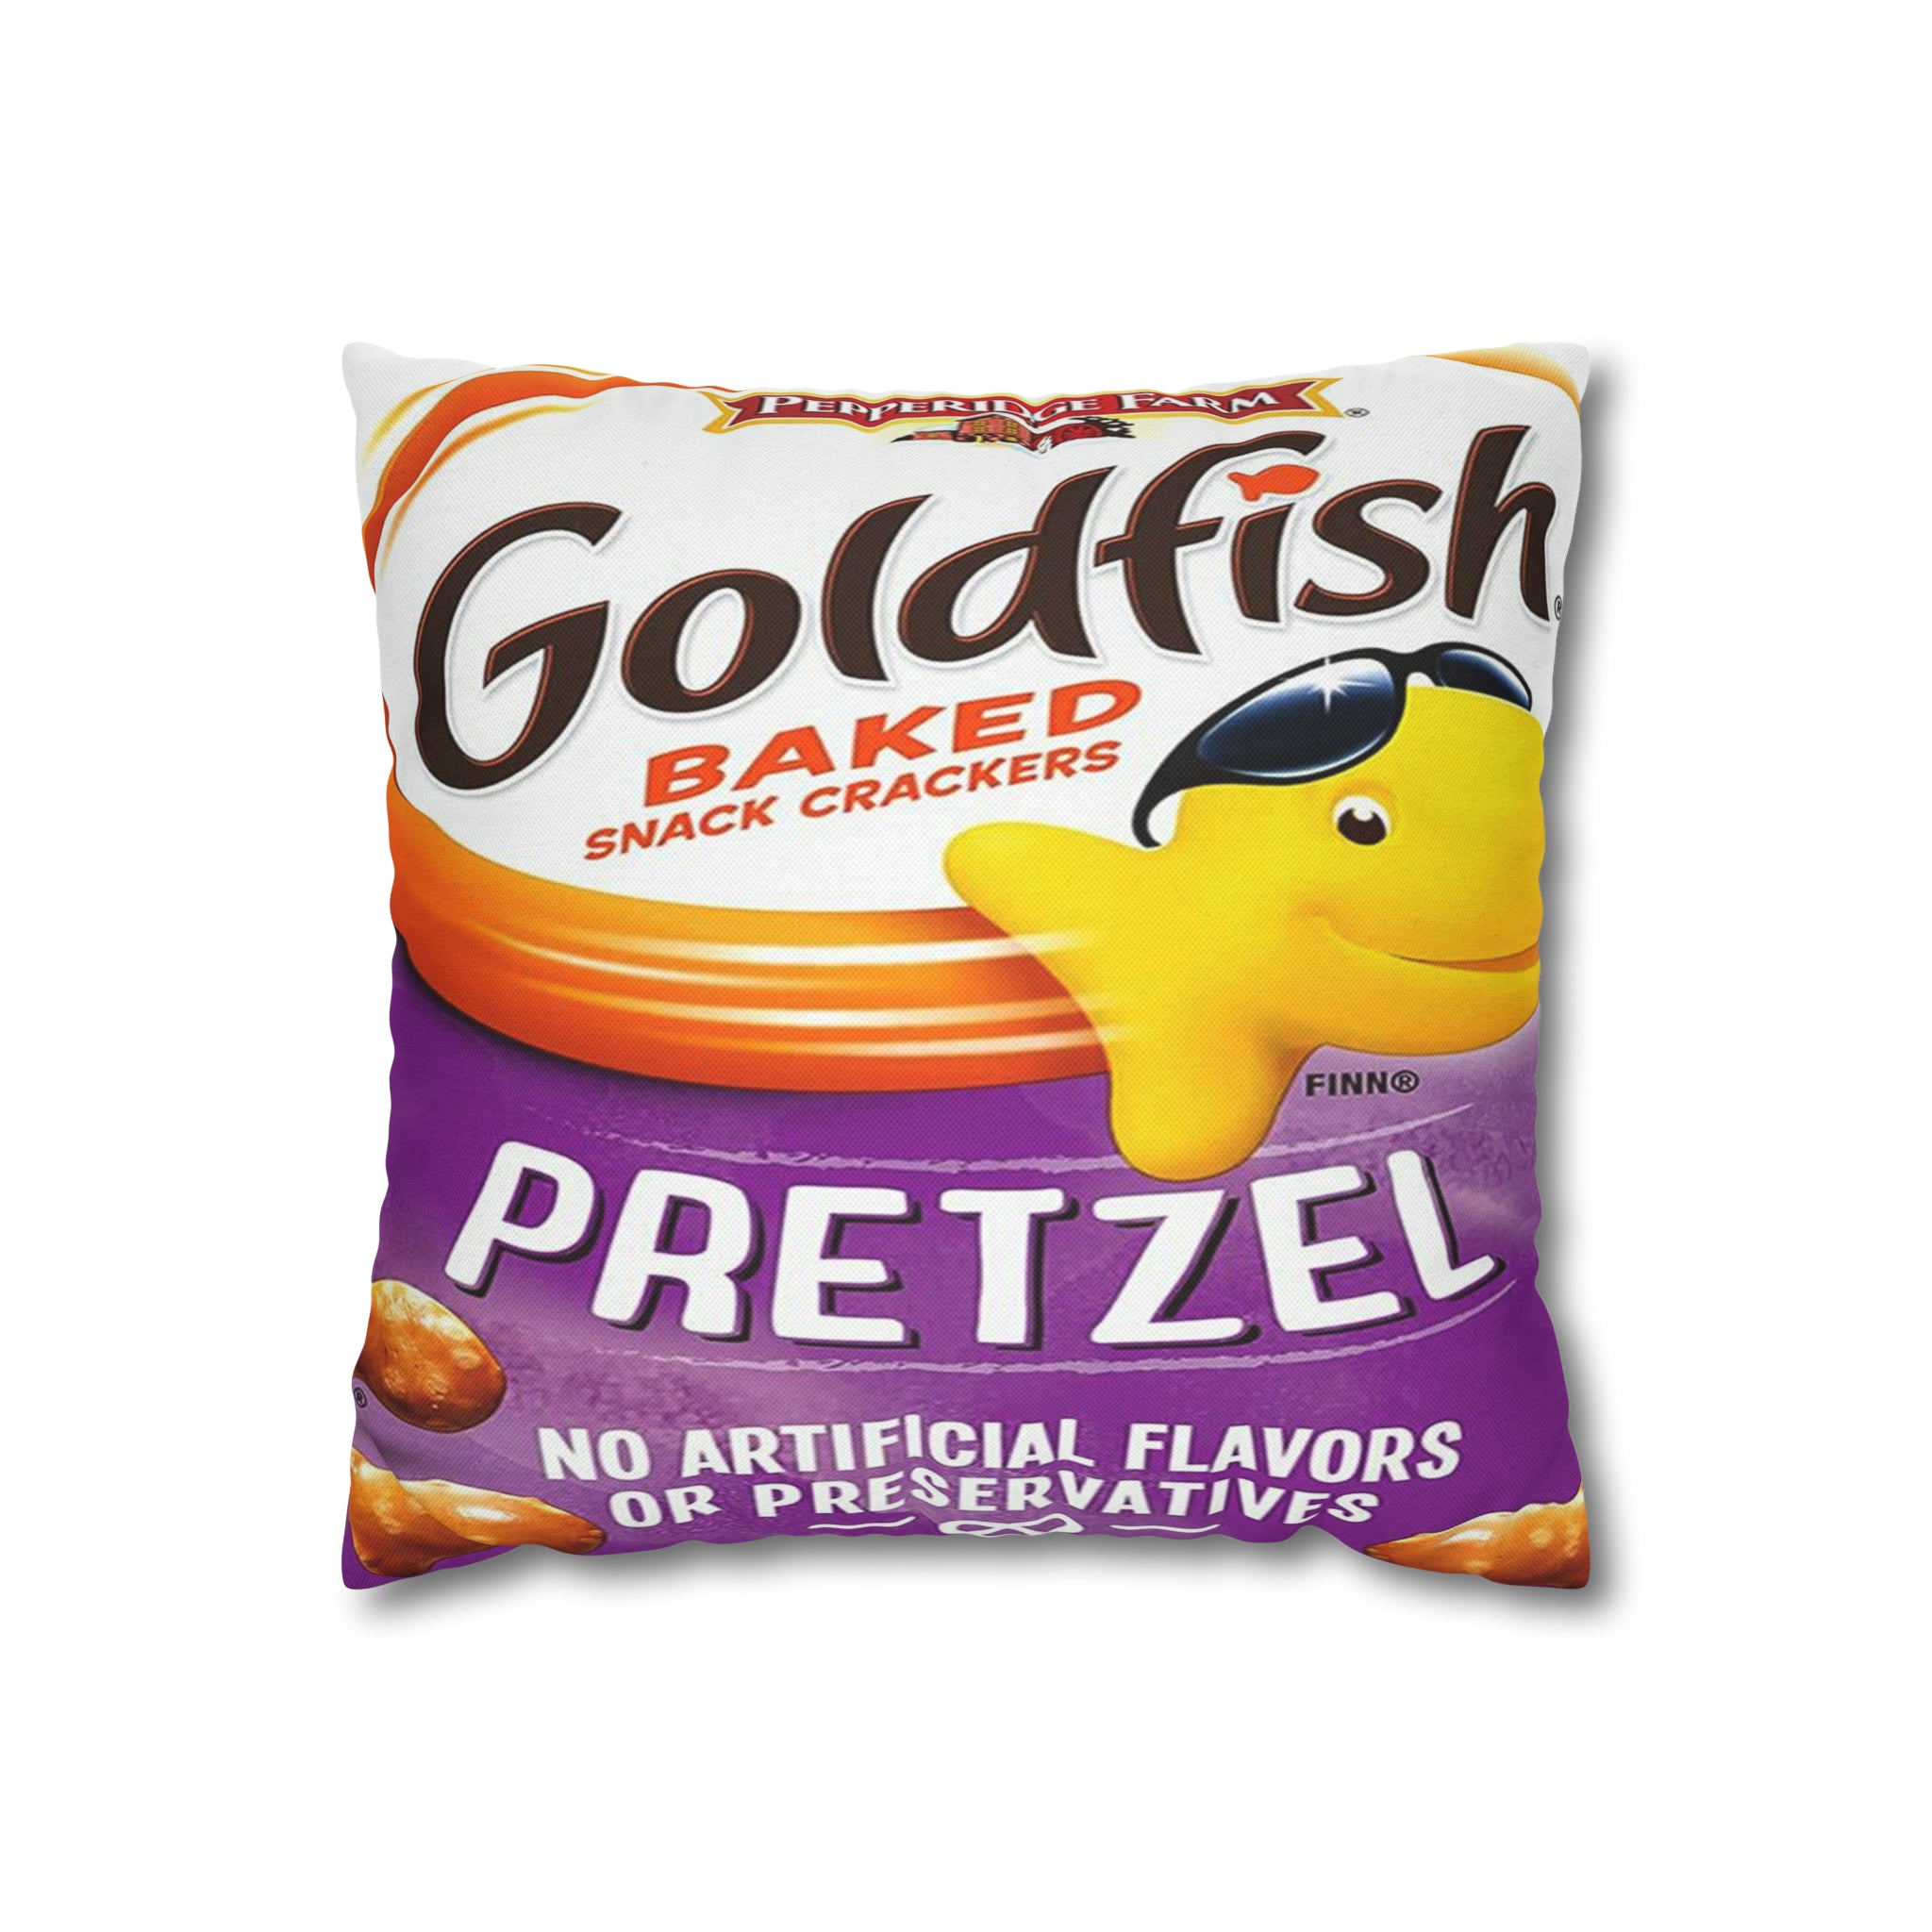 goldfish pretzel crackers